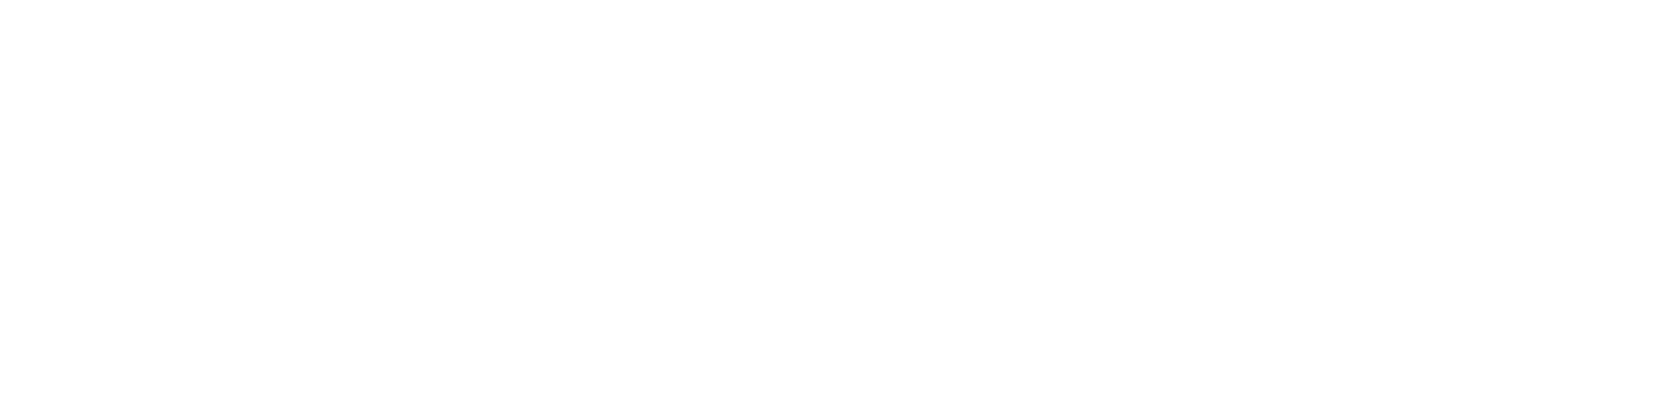 Desupervised and redglead logo